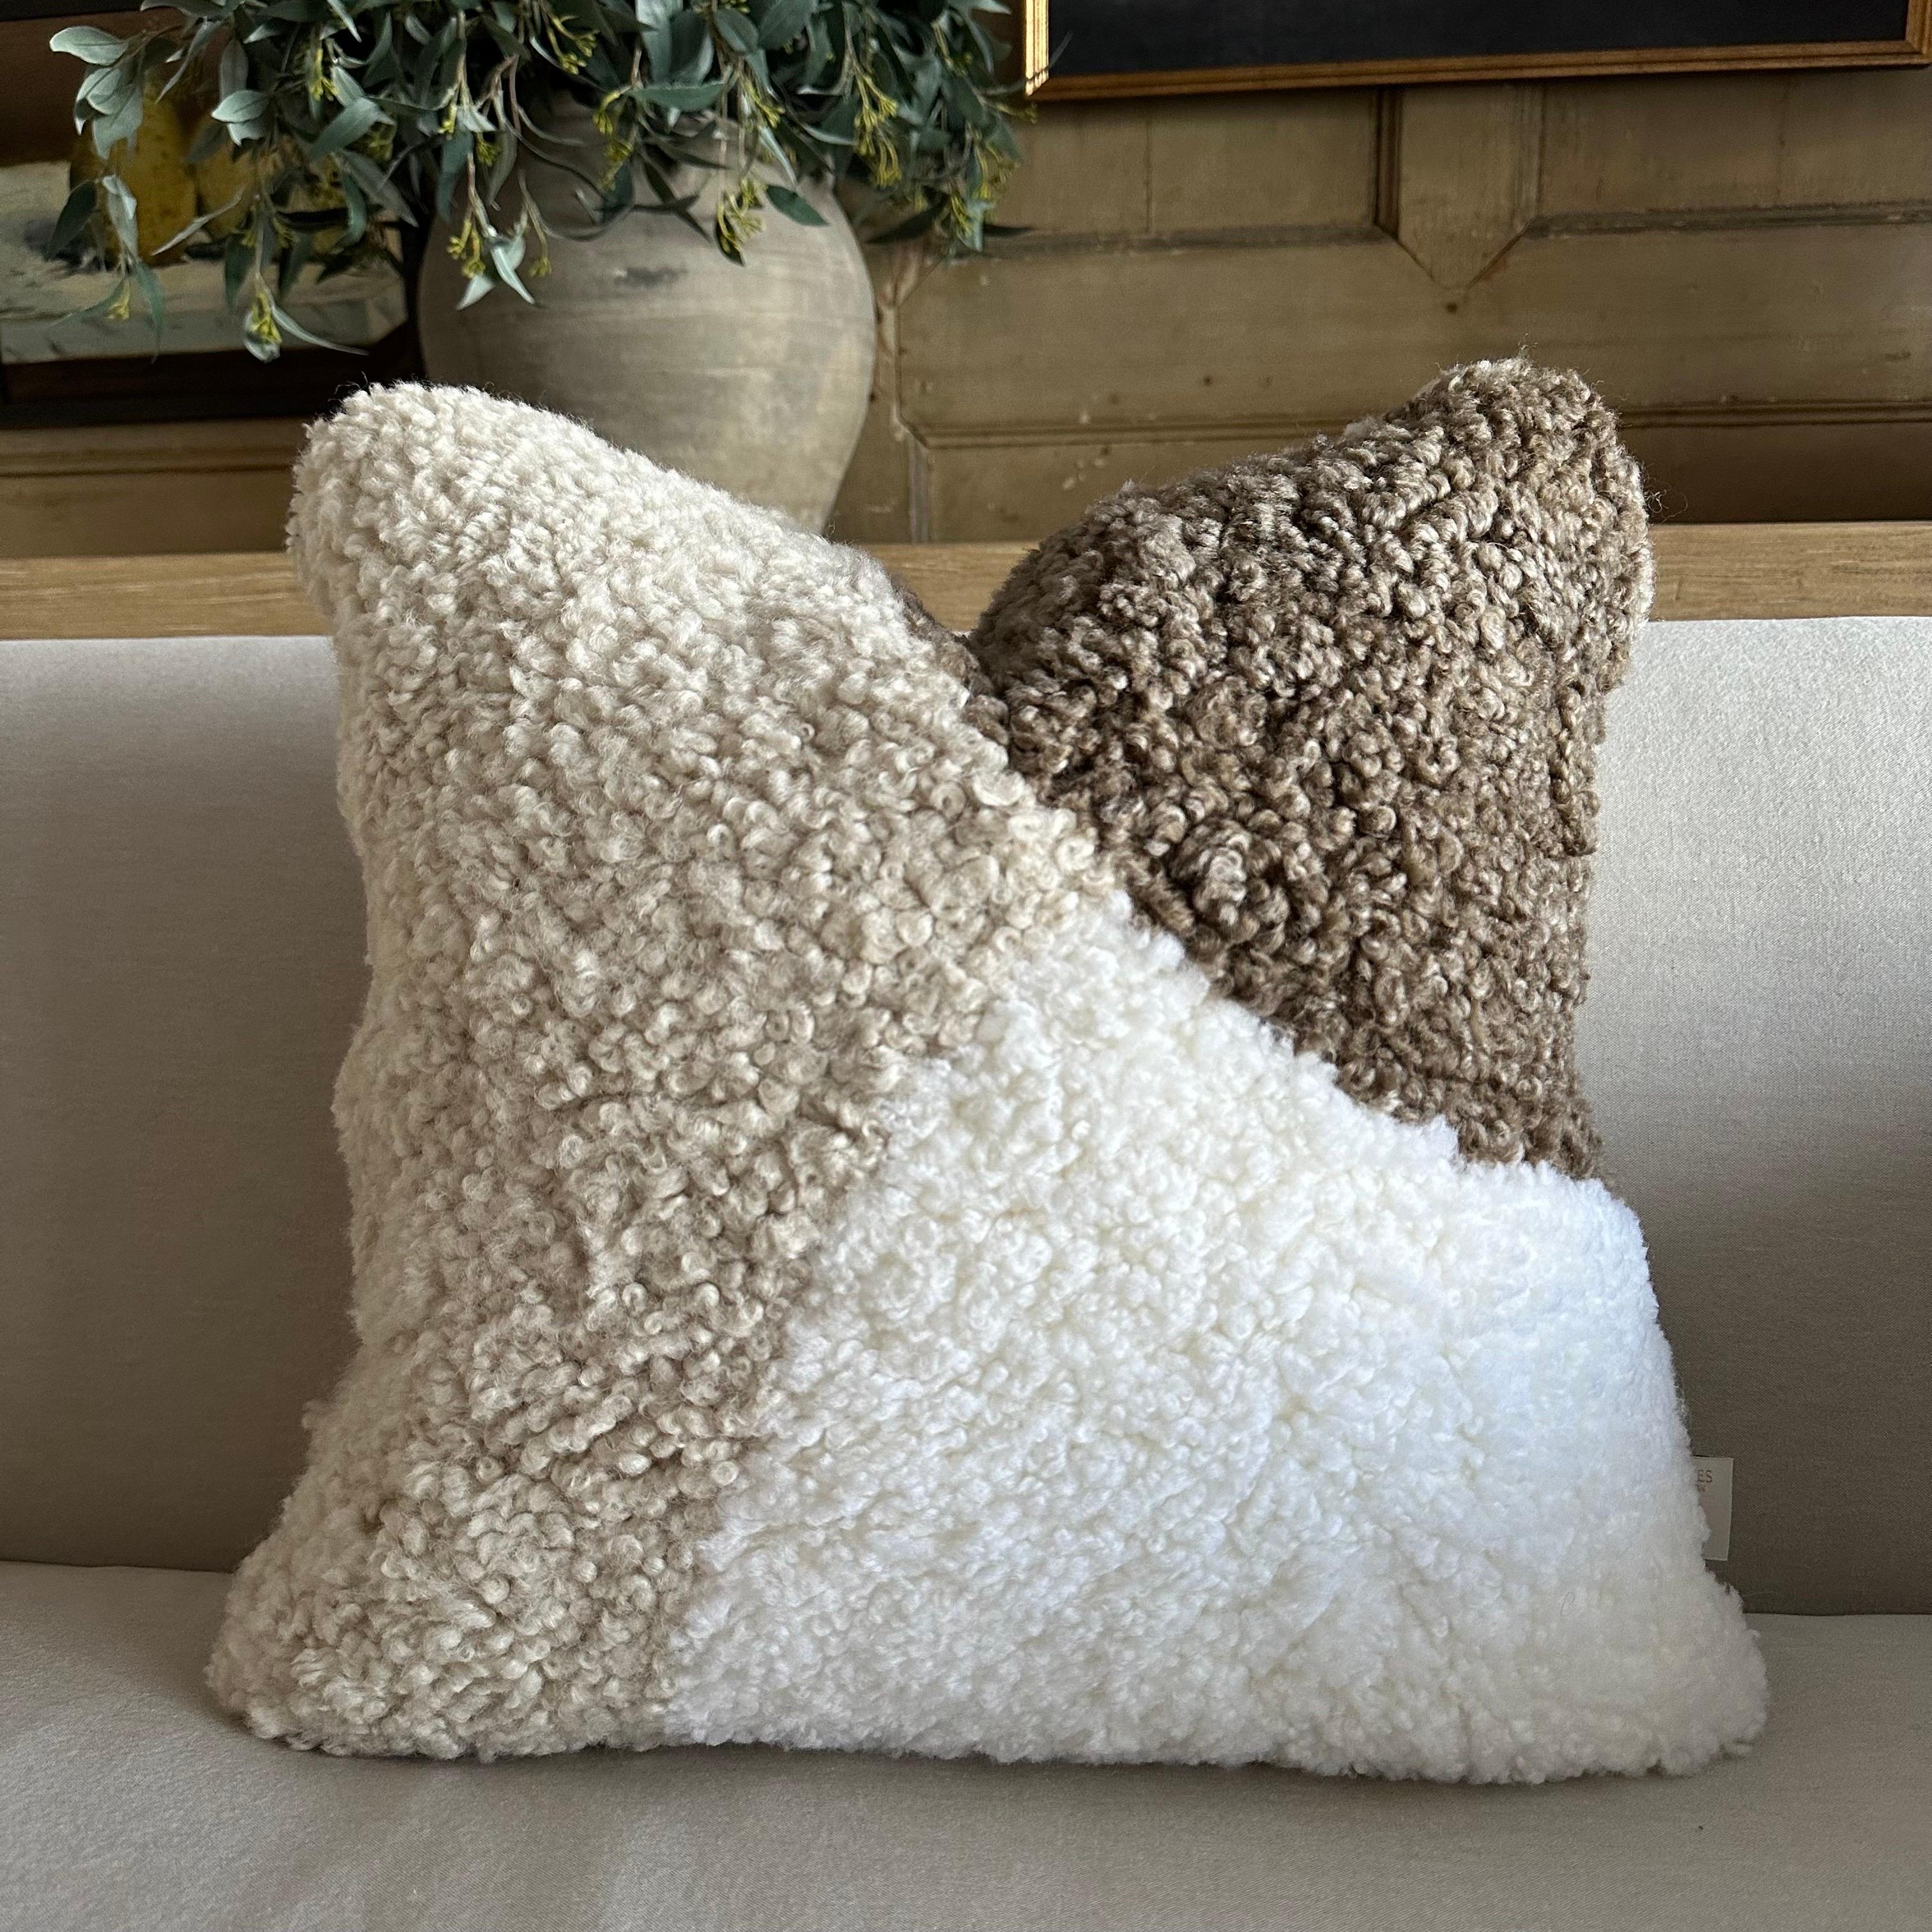 100% pure New Zealand Sheepskin pillow
Size: 18